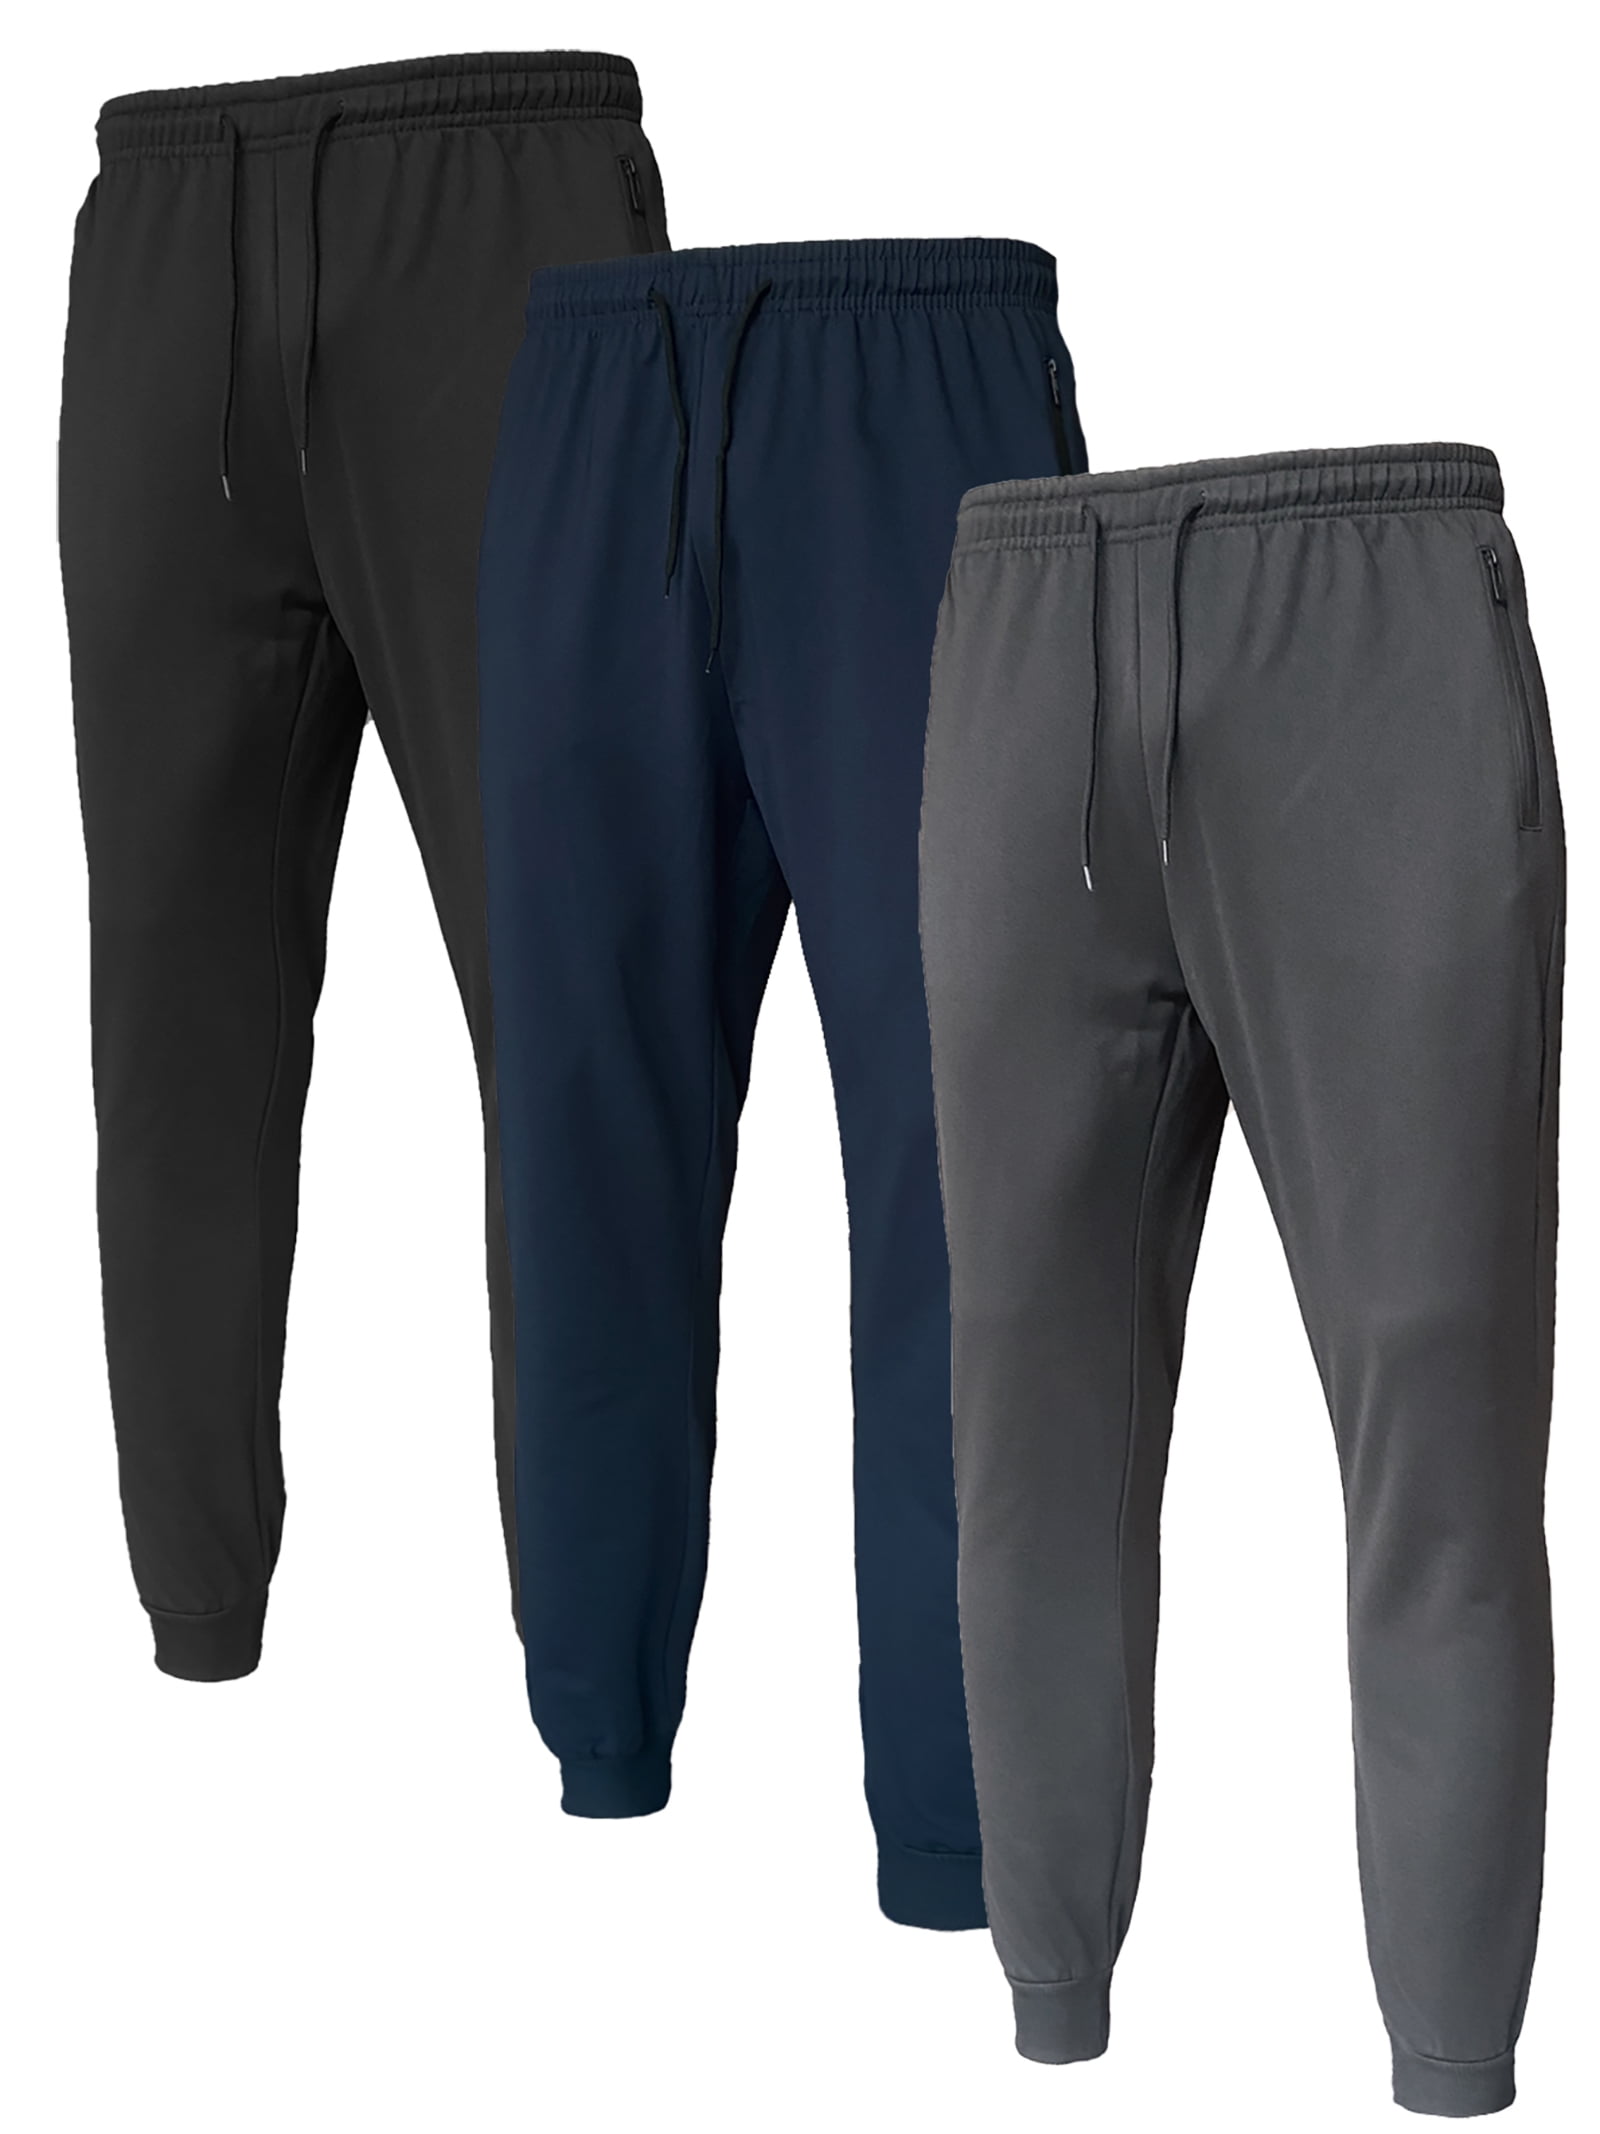 kpoplk Men's Pants,Mens Sweatpants Running Stretch Drawstring Pocket  Sweatpants Slim Pants Sports Joggers Fashion Jogging Sweat Pants(Pink,S)